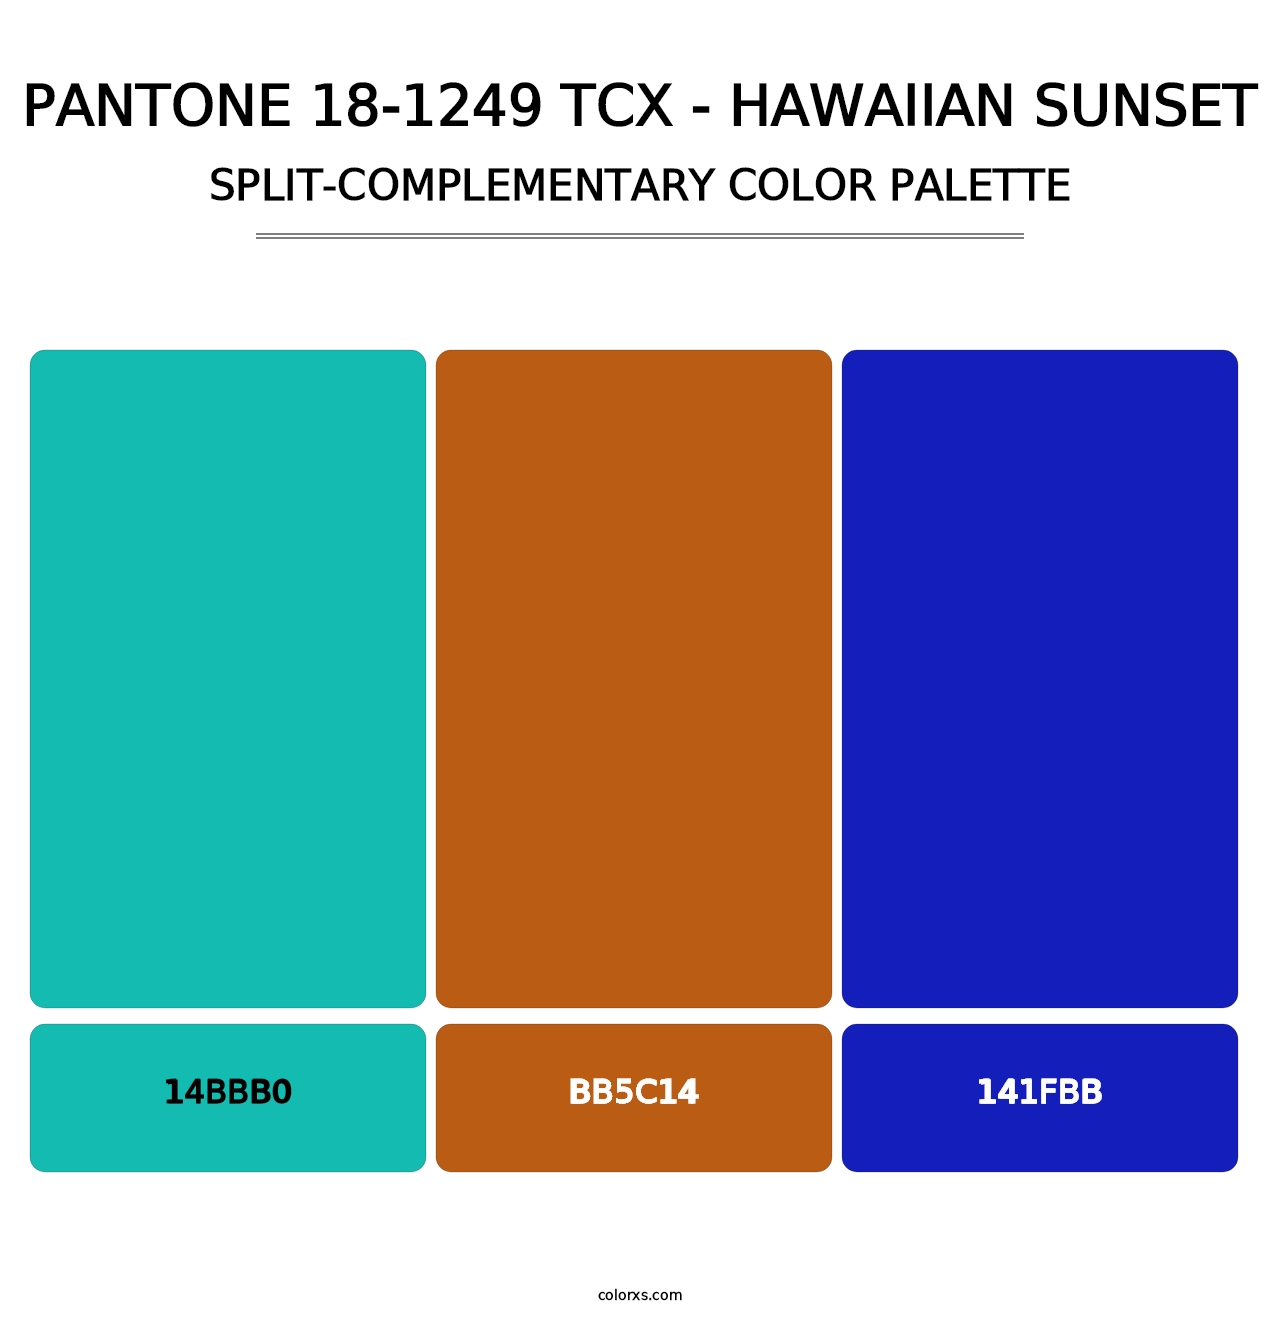 PANTONE 18-1249 TCX - Hawaiian Sunset - Split-Complementary Color Palette